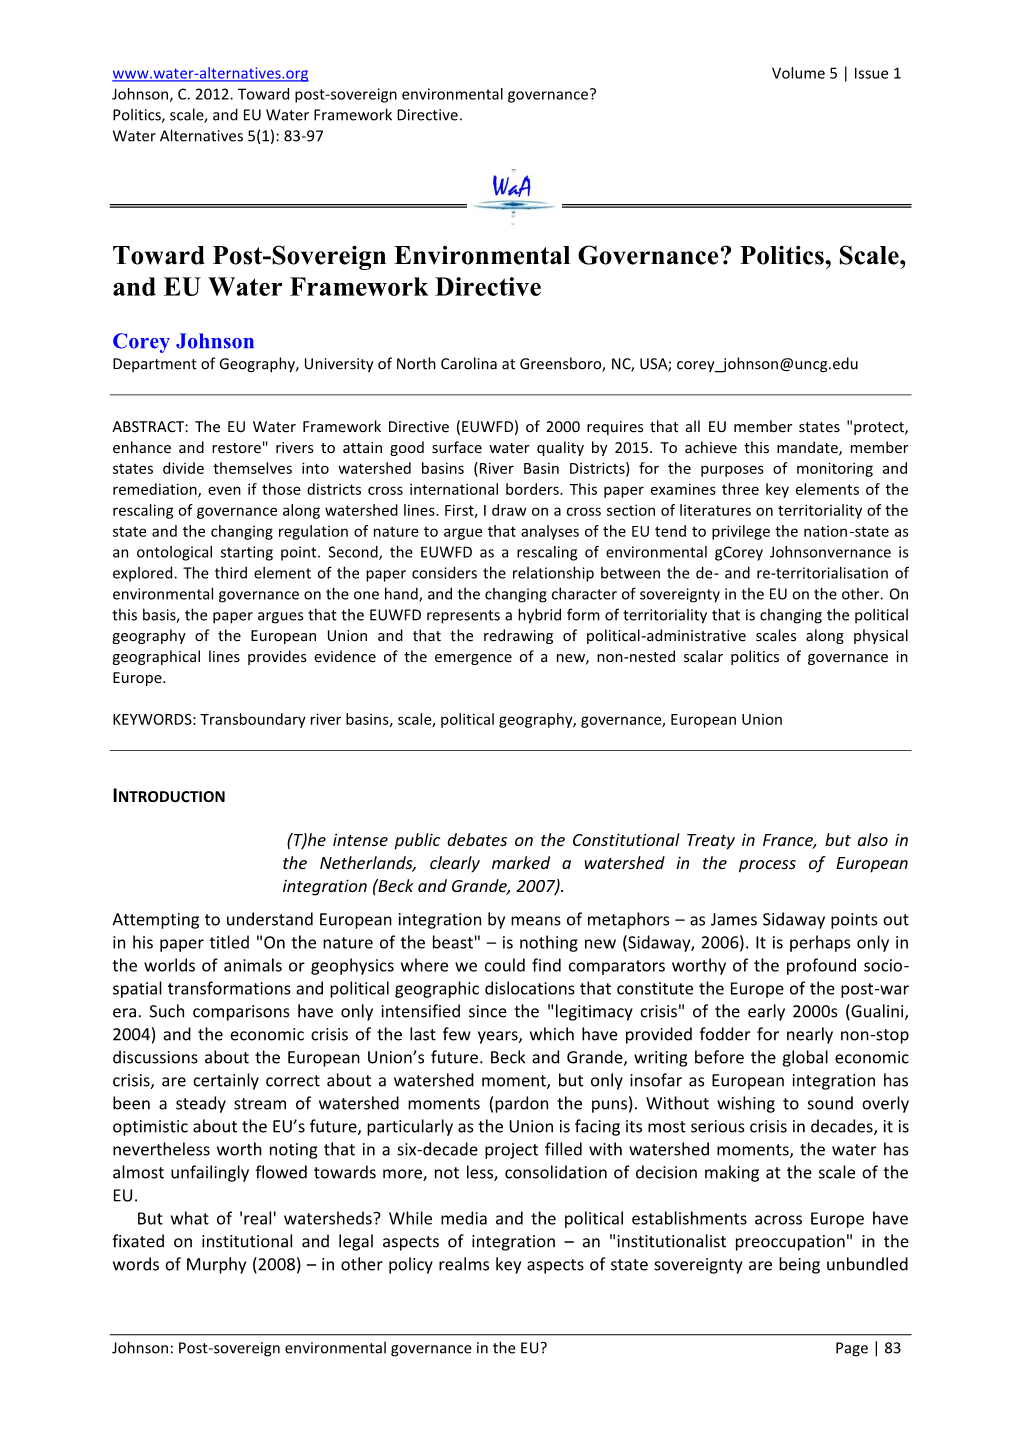 Toward Post-Sovereign Environmental Governance? Politics, Scale, and EU Water Framework Directive